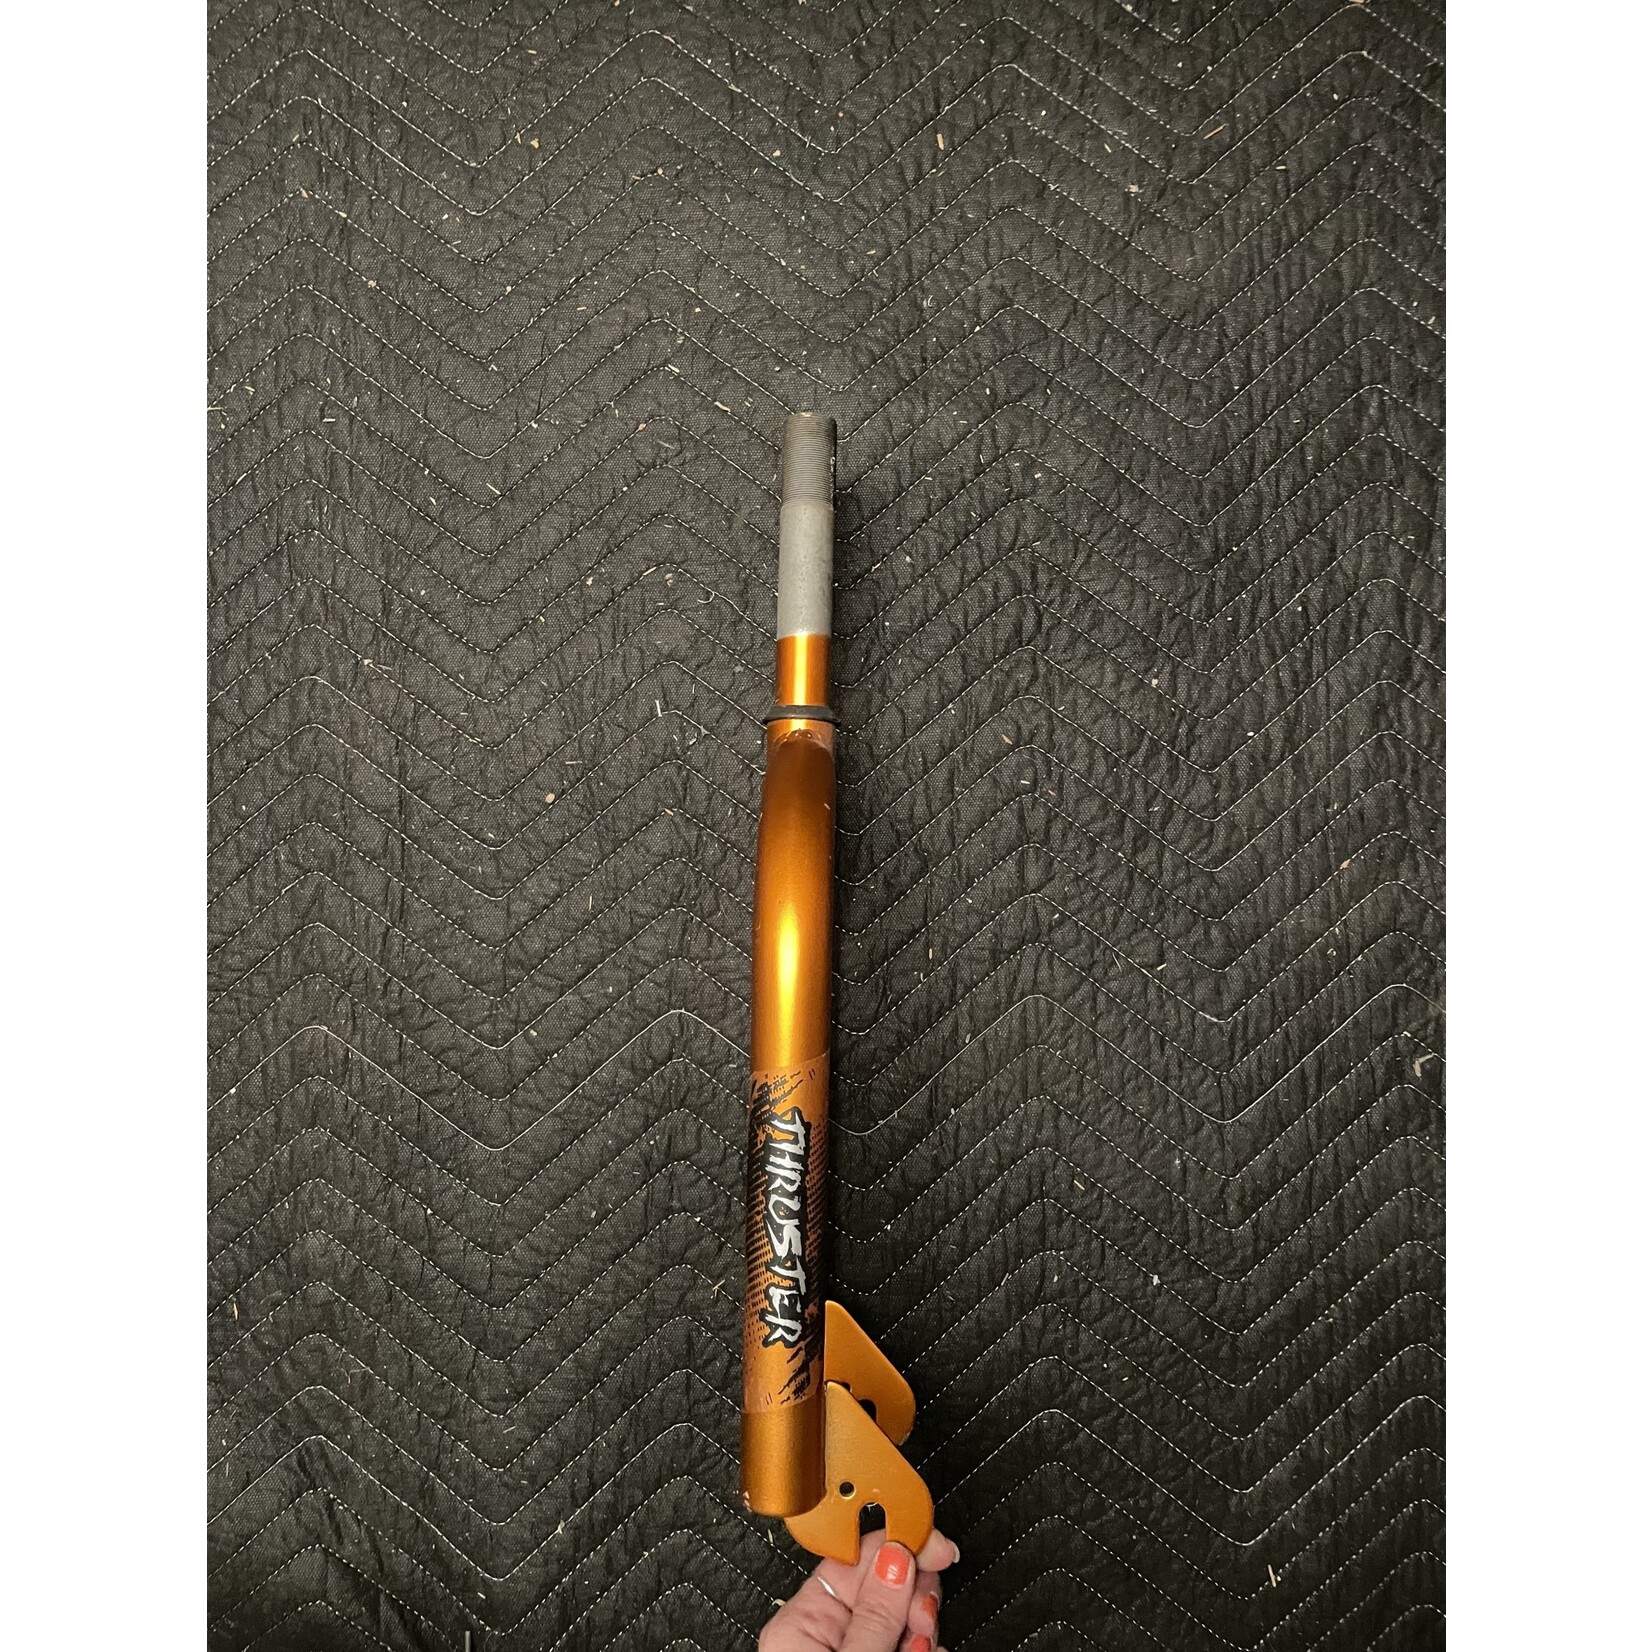 Thruster 1” x 5 1/2” Threaded 20” Bicycle Fork (Orange)